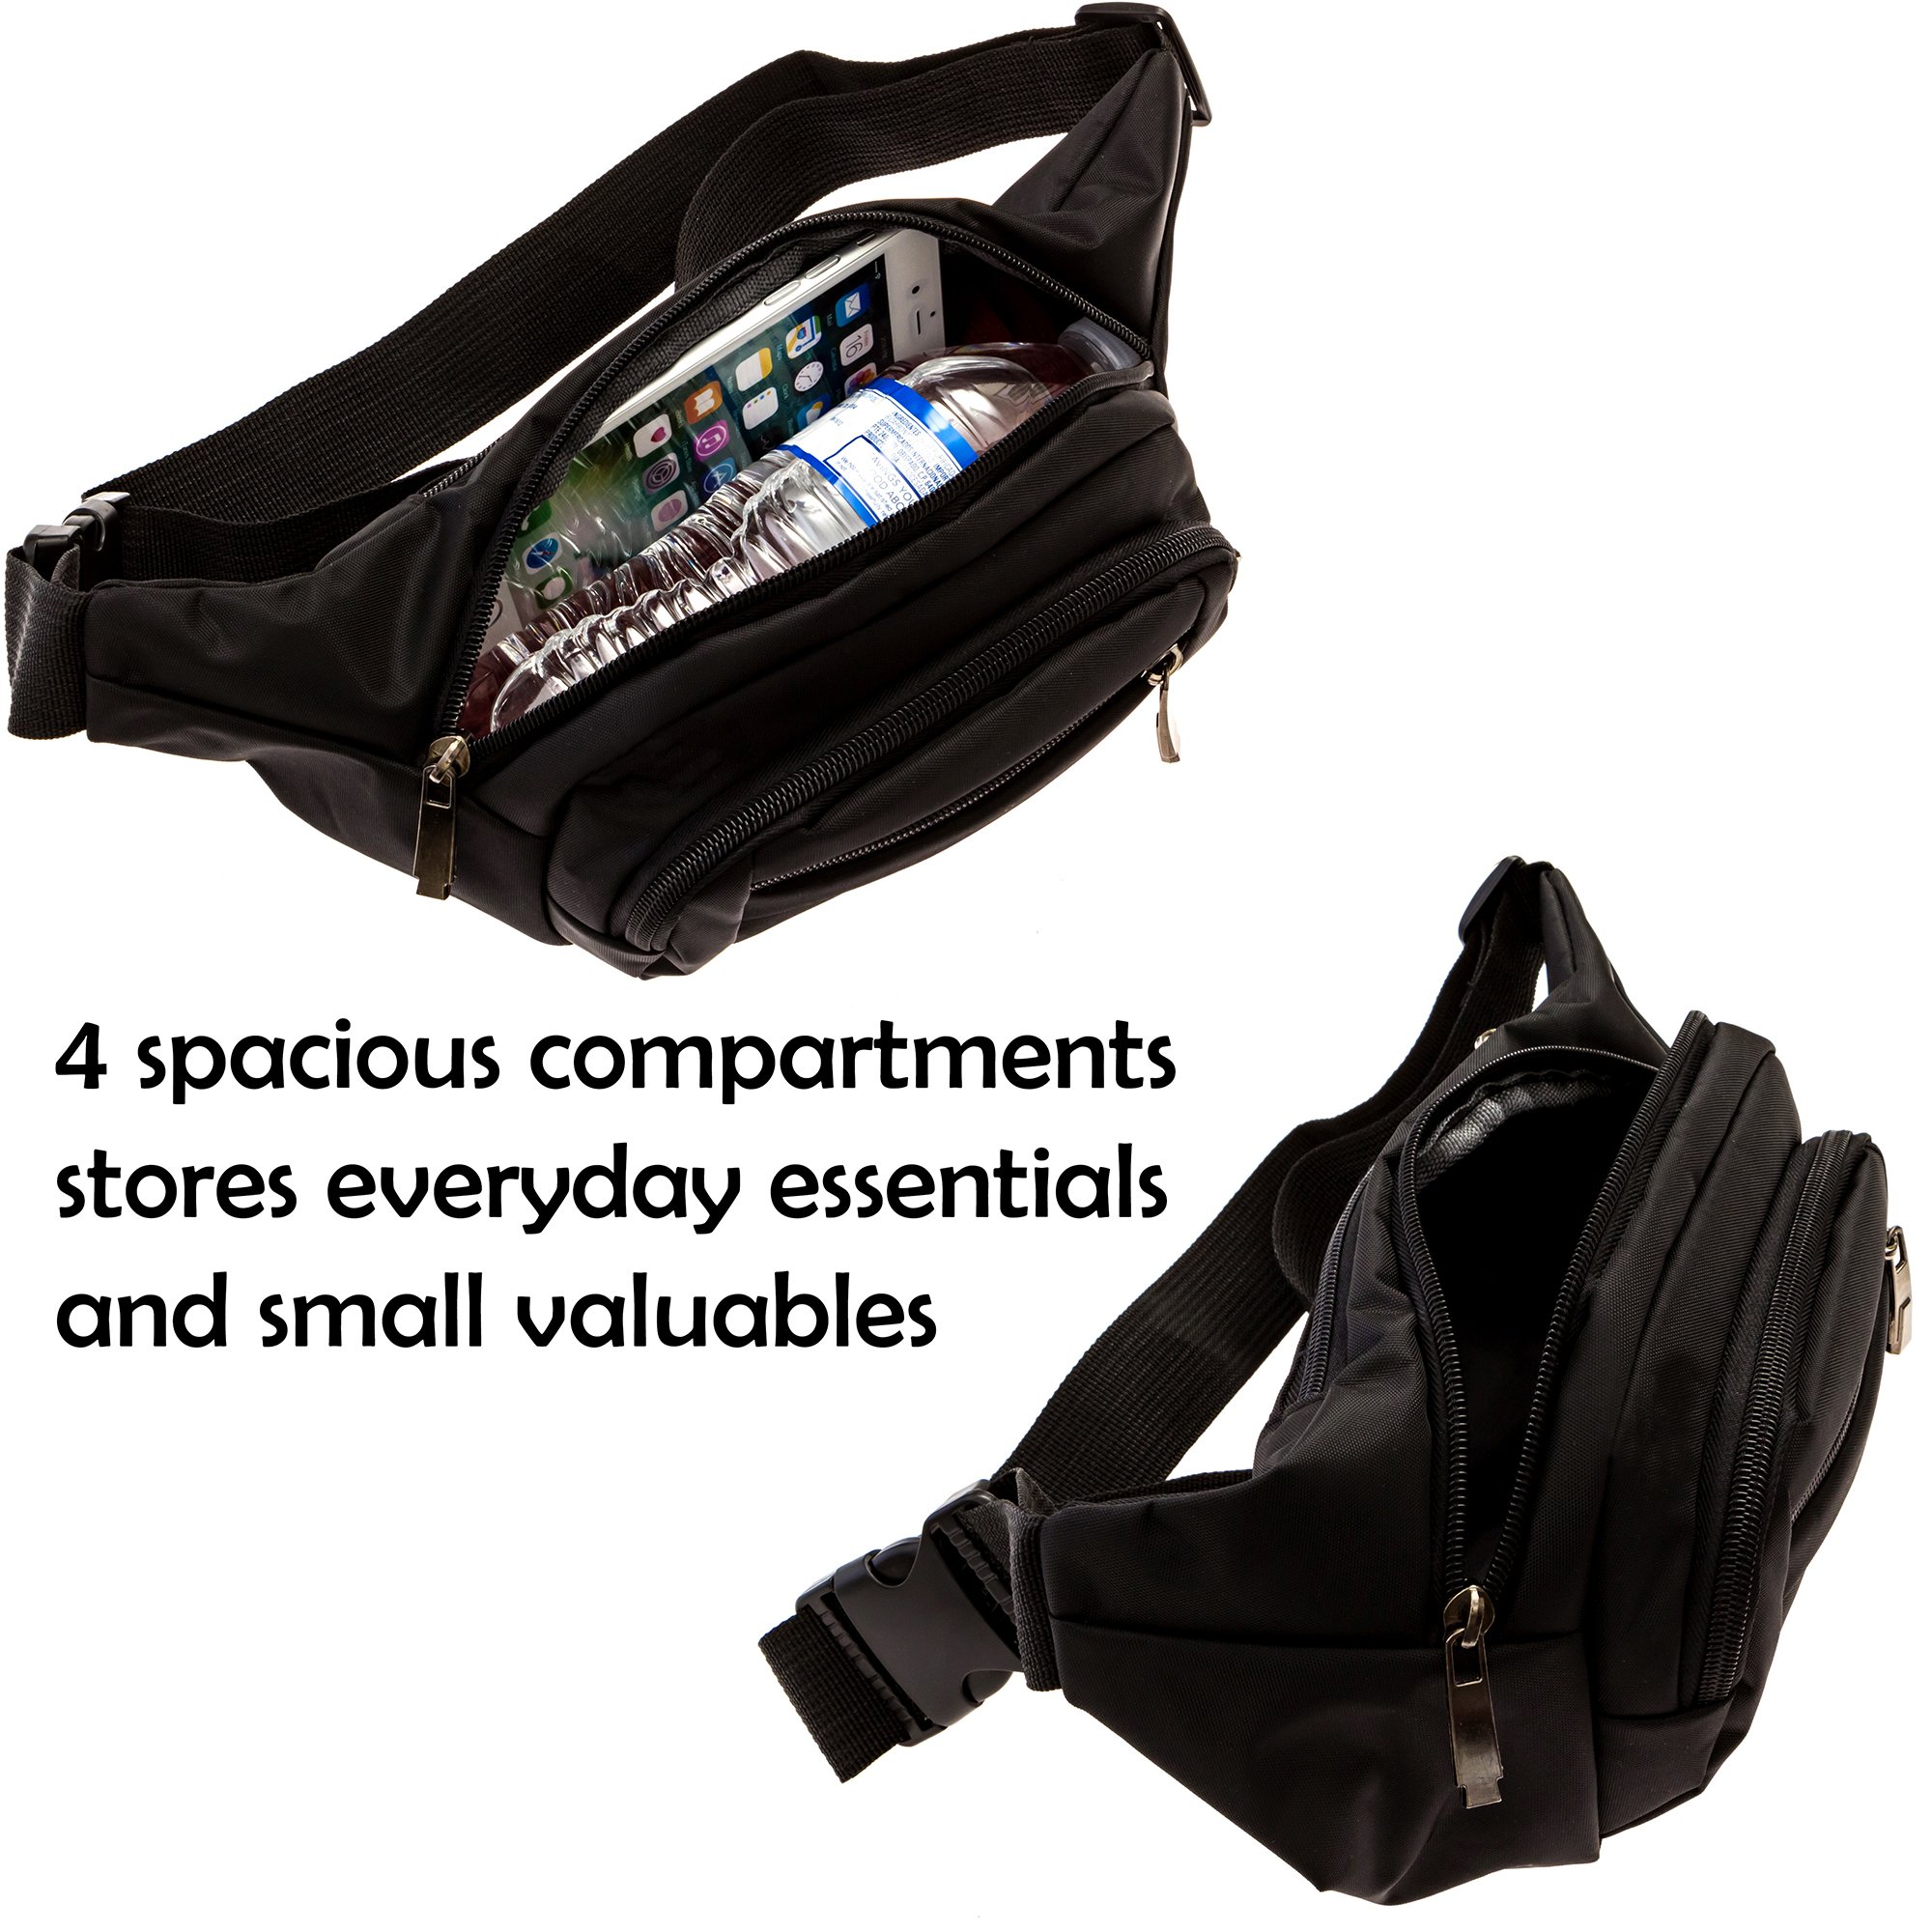 HAITEK Waist Bag for Men and Women–Light, Comfortable and Adjustable Fanny Pack